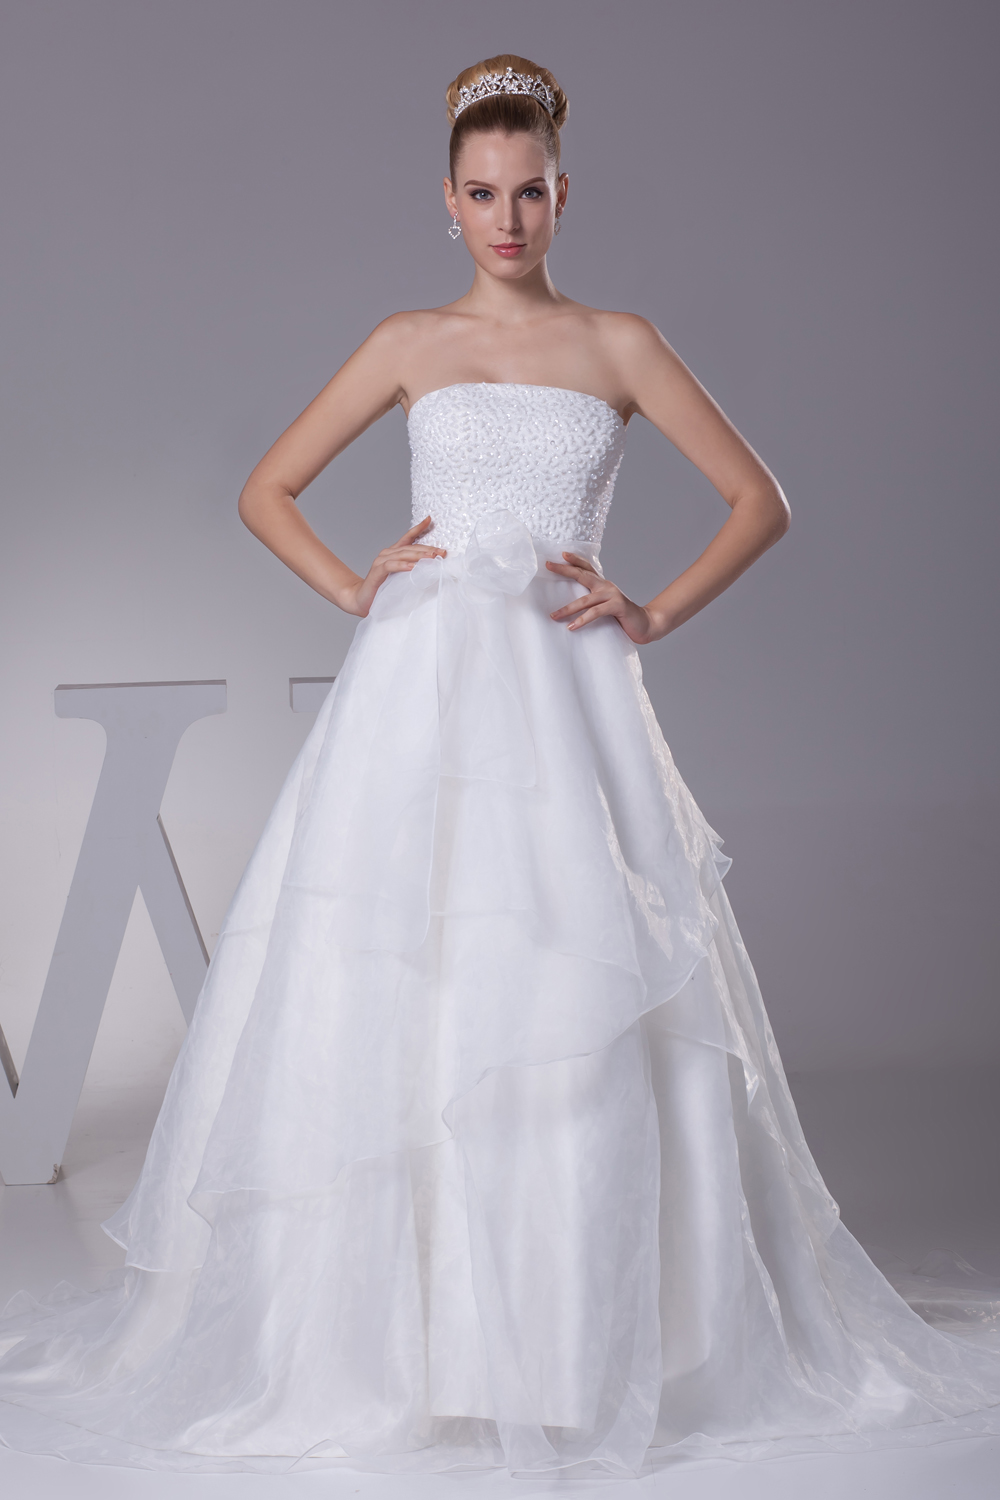 Beading Strapless Court Train A-Line Wedding Dress with Zipper-up